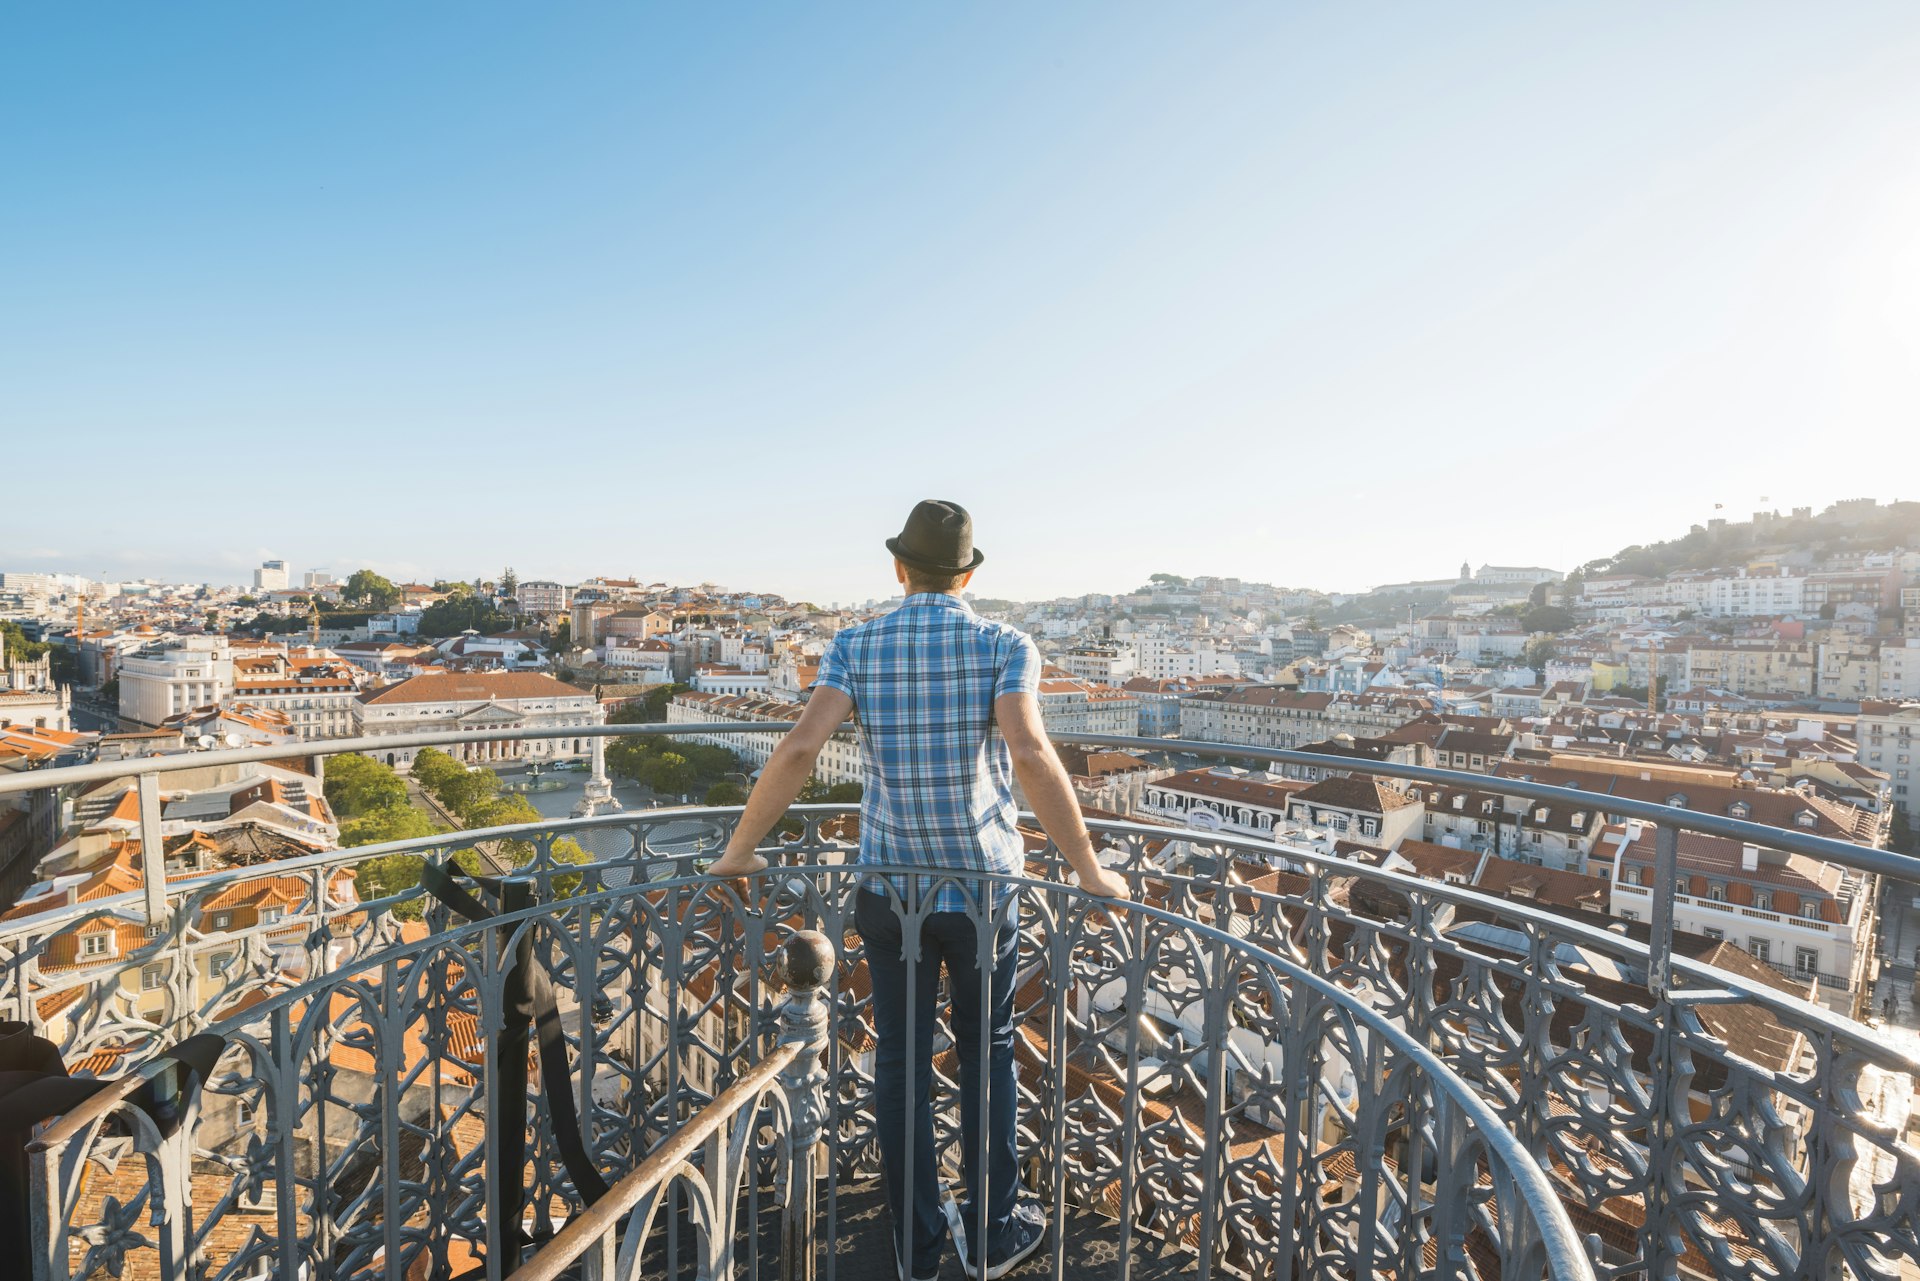 Tourist admiring the view from the Elevador de Santa Justa, Lisbon